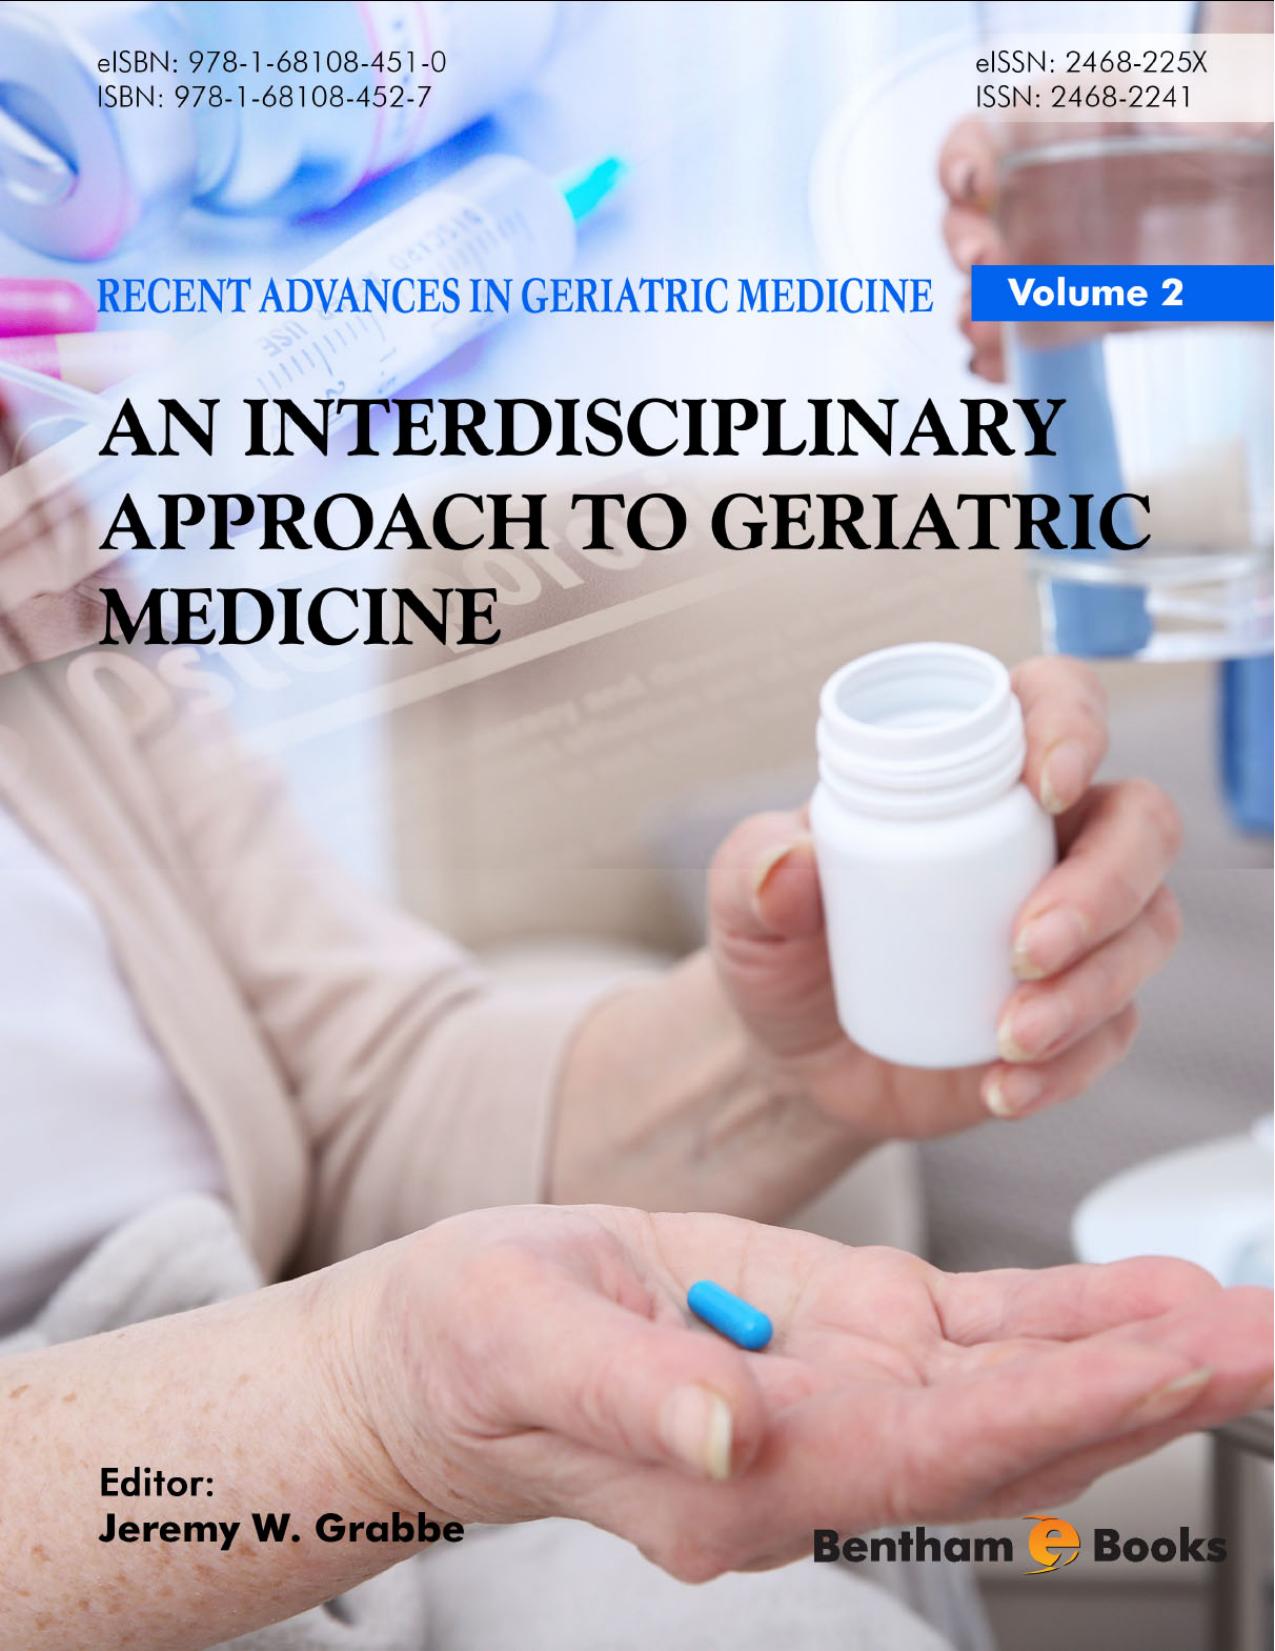 Recent Advances in Geriatric Medicine Volume 2: An Interdisciplinary Approach to Geriatric Medicine